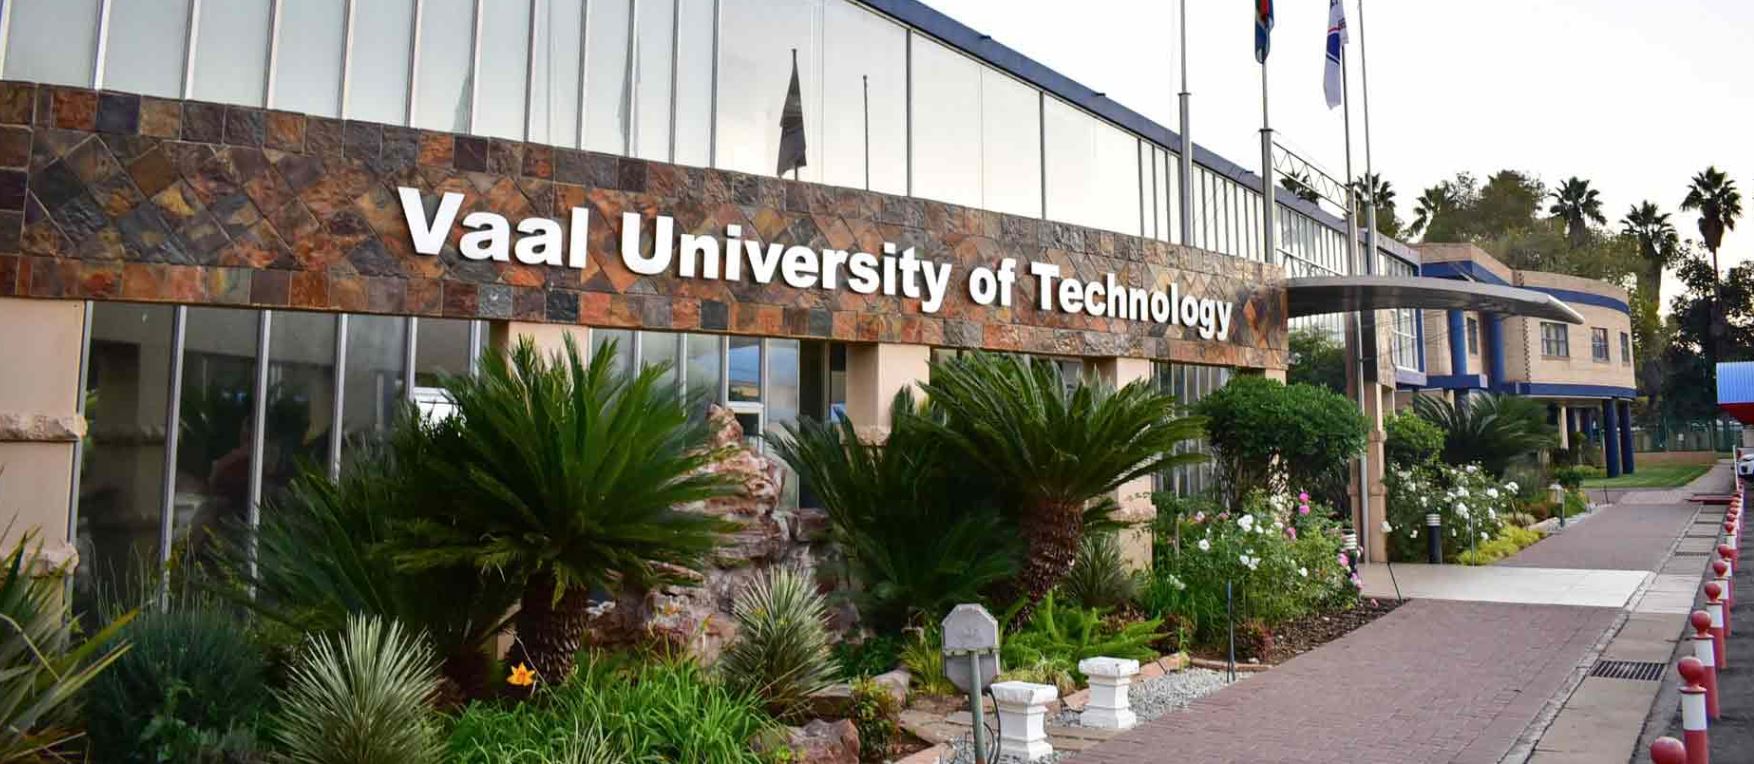 Vaal University of Technology Online Application